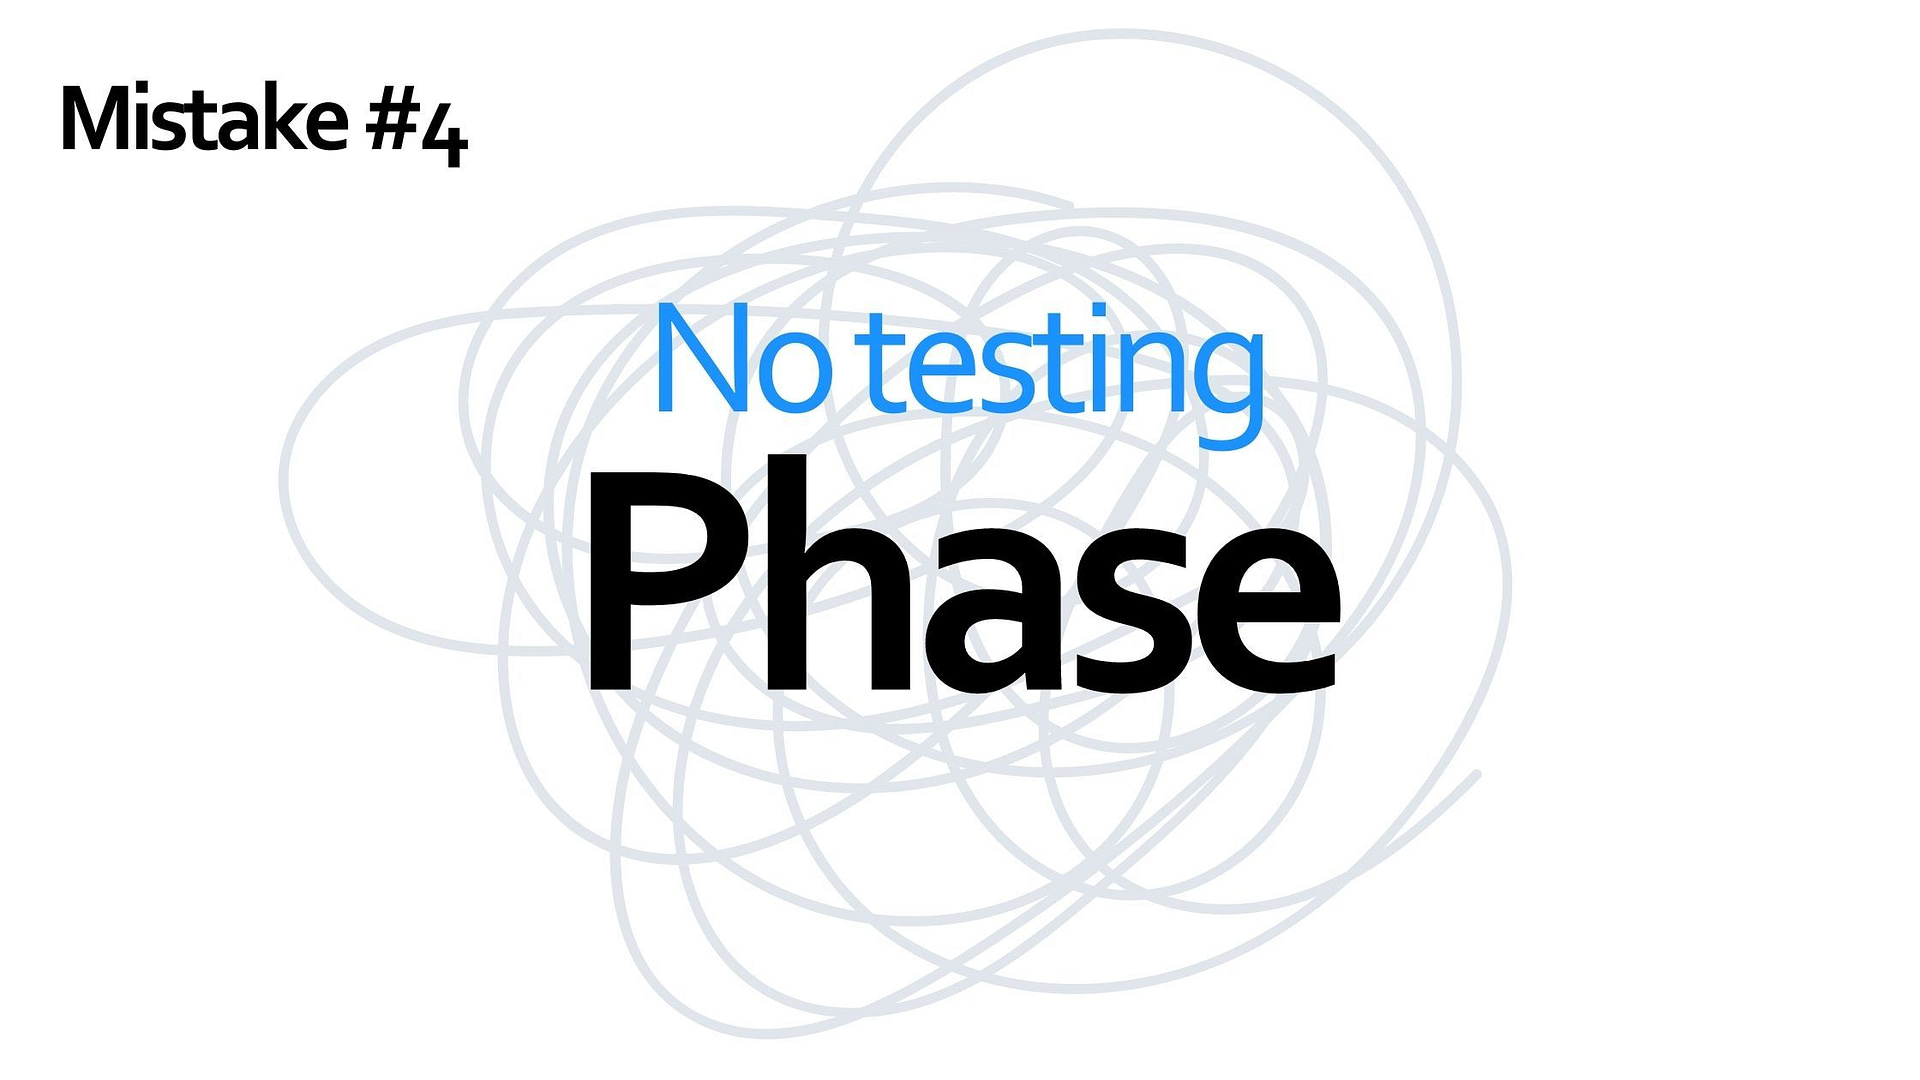 Mistake #4 - no testing phase